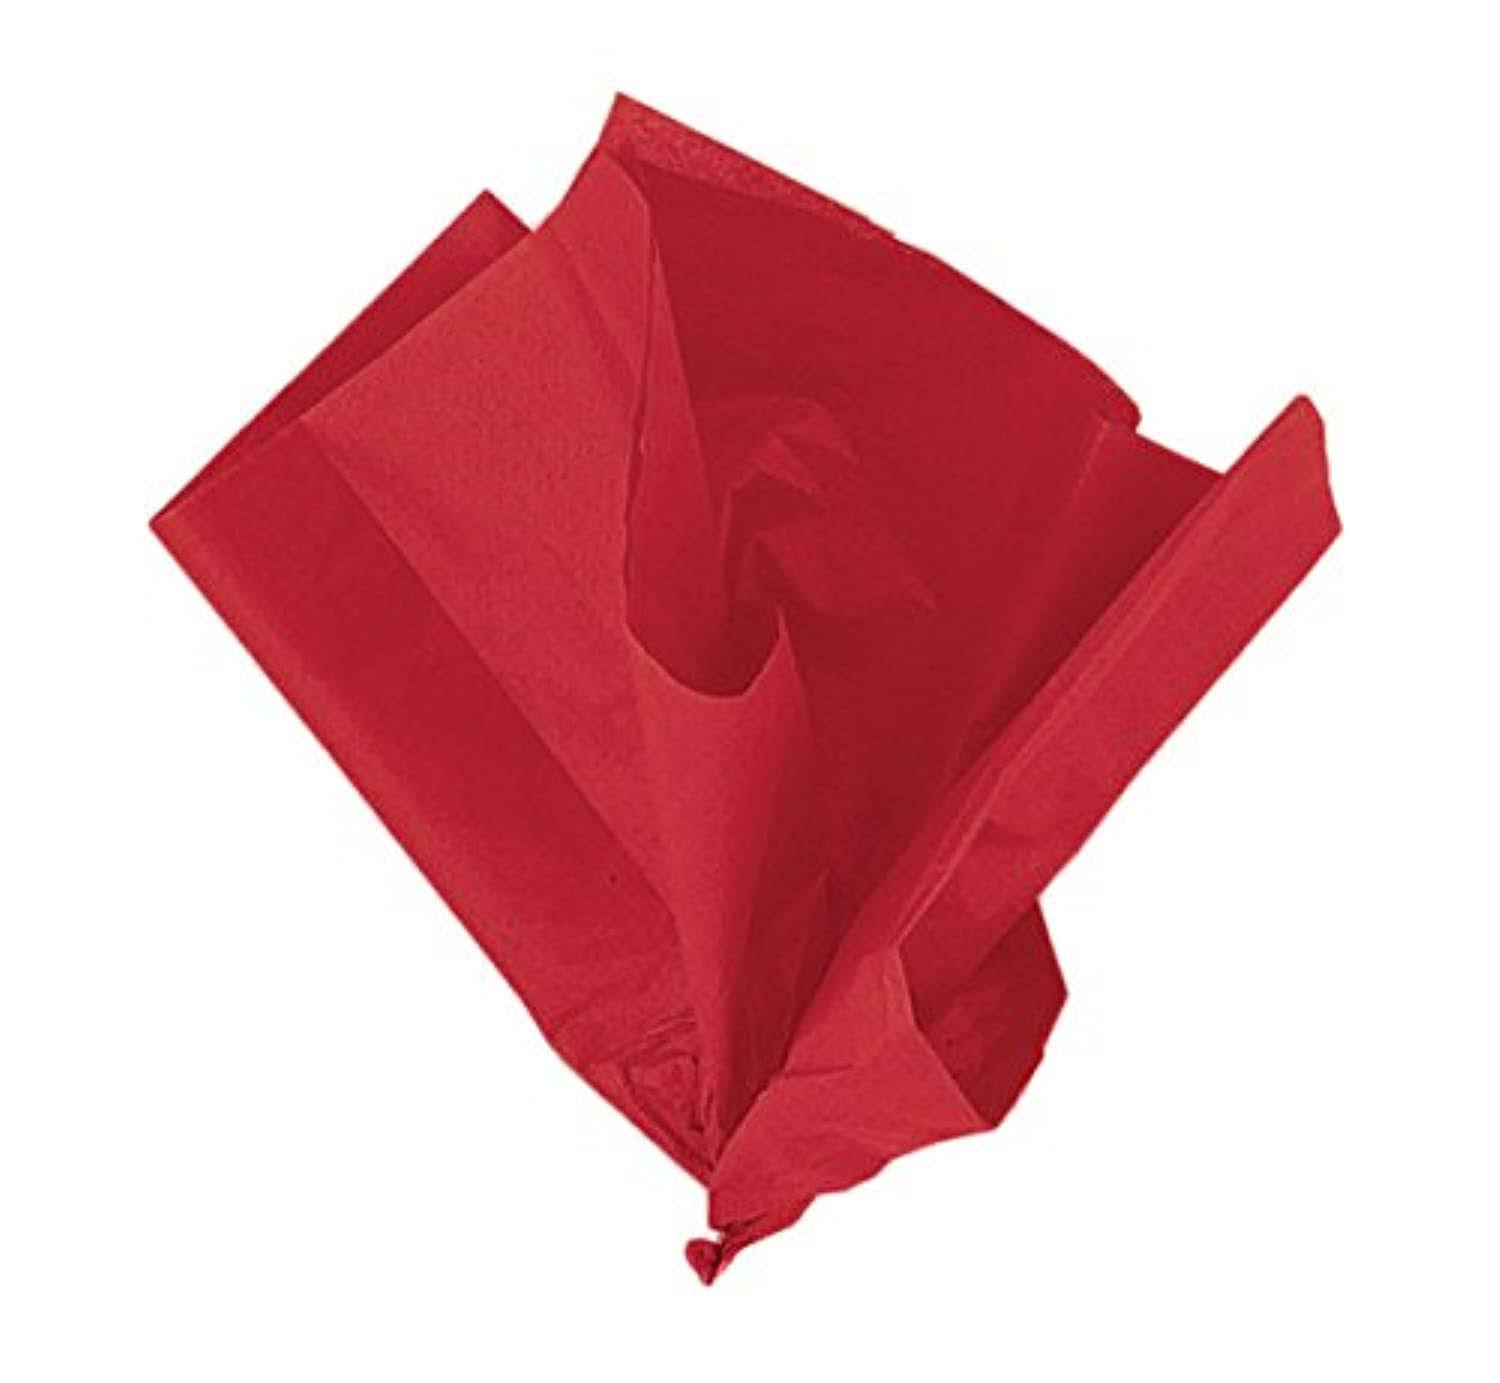 Unique Tissue Gift Wrap - Red, 10ct